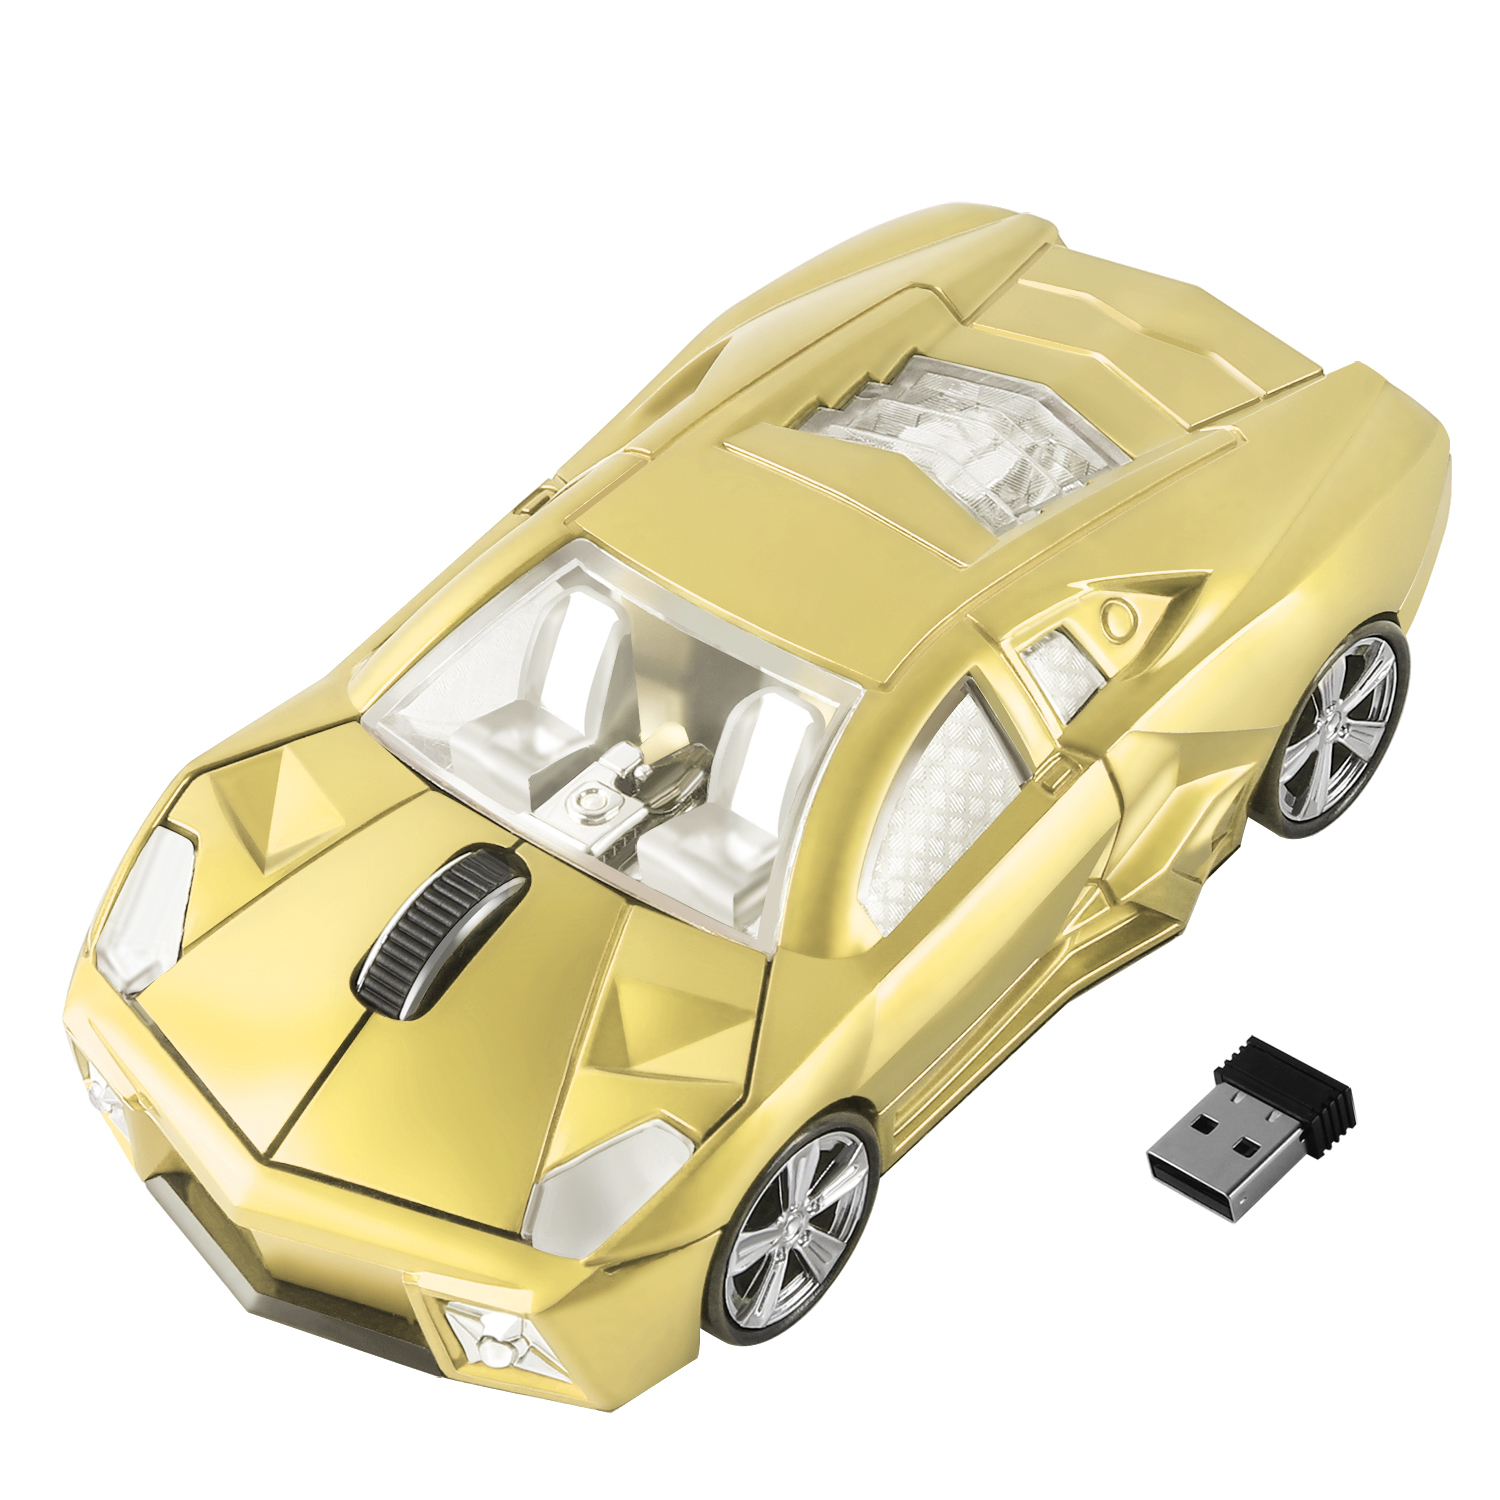 I-2-4G-Wireless-Mouse-Ergonomic-Sports-Car-Design-Gaming-Mause-1600-DPI-USB-Optical-Kids-Gift (8)